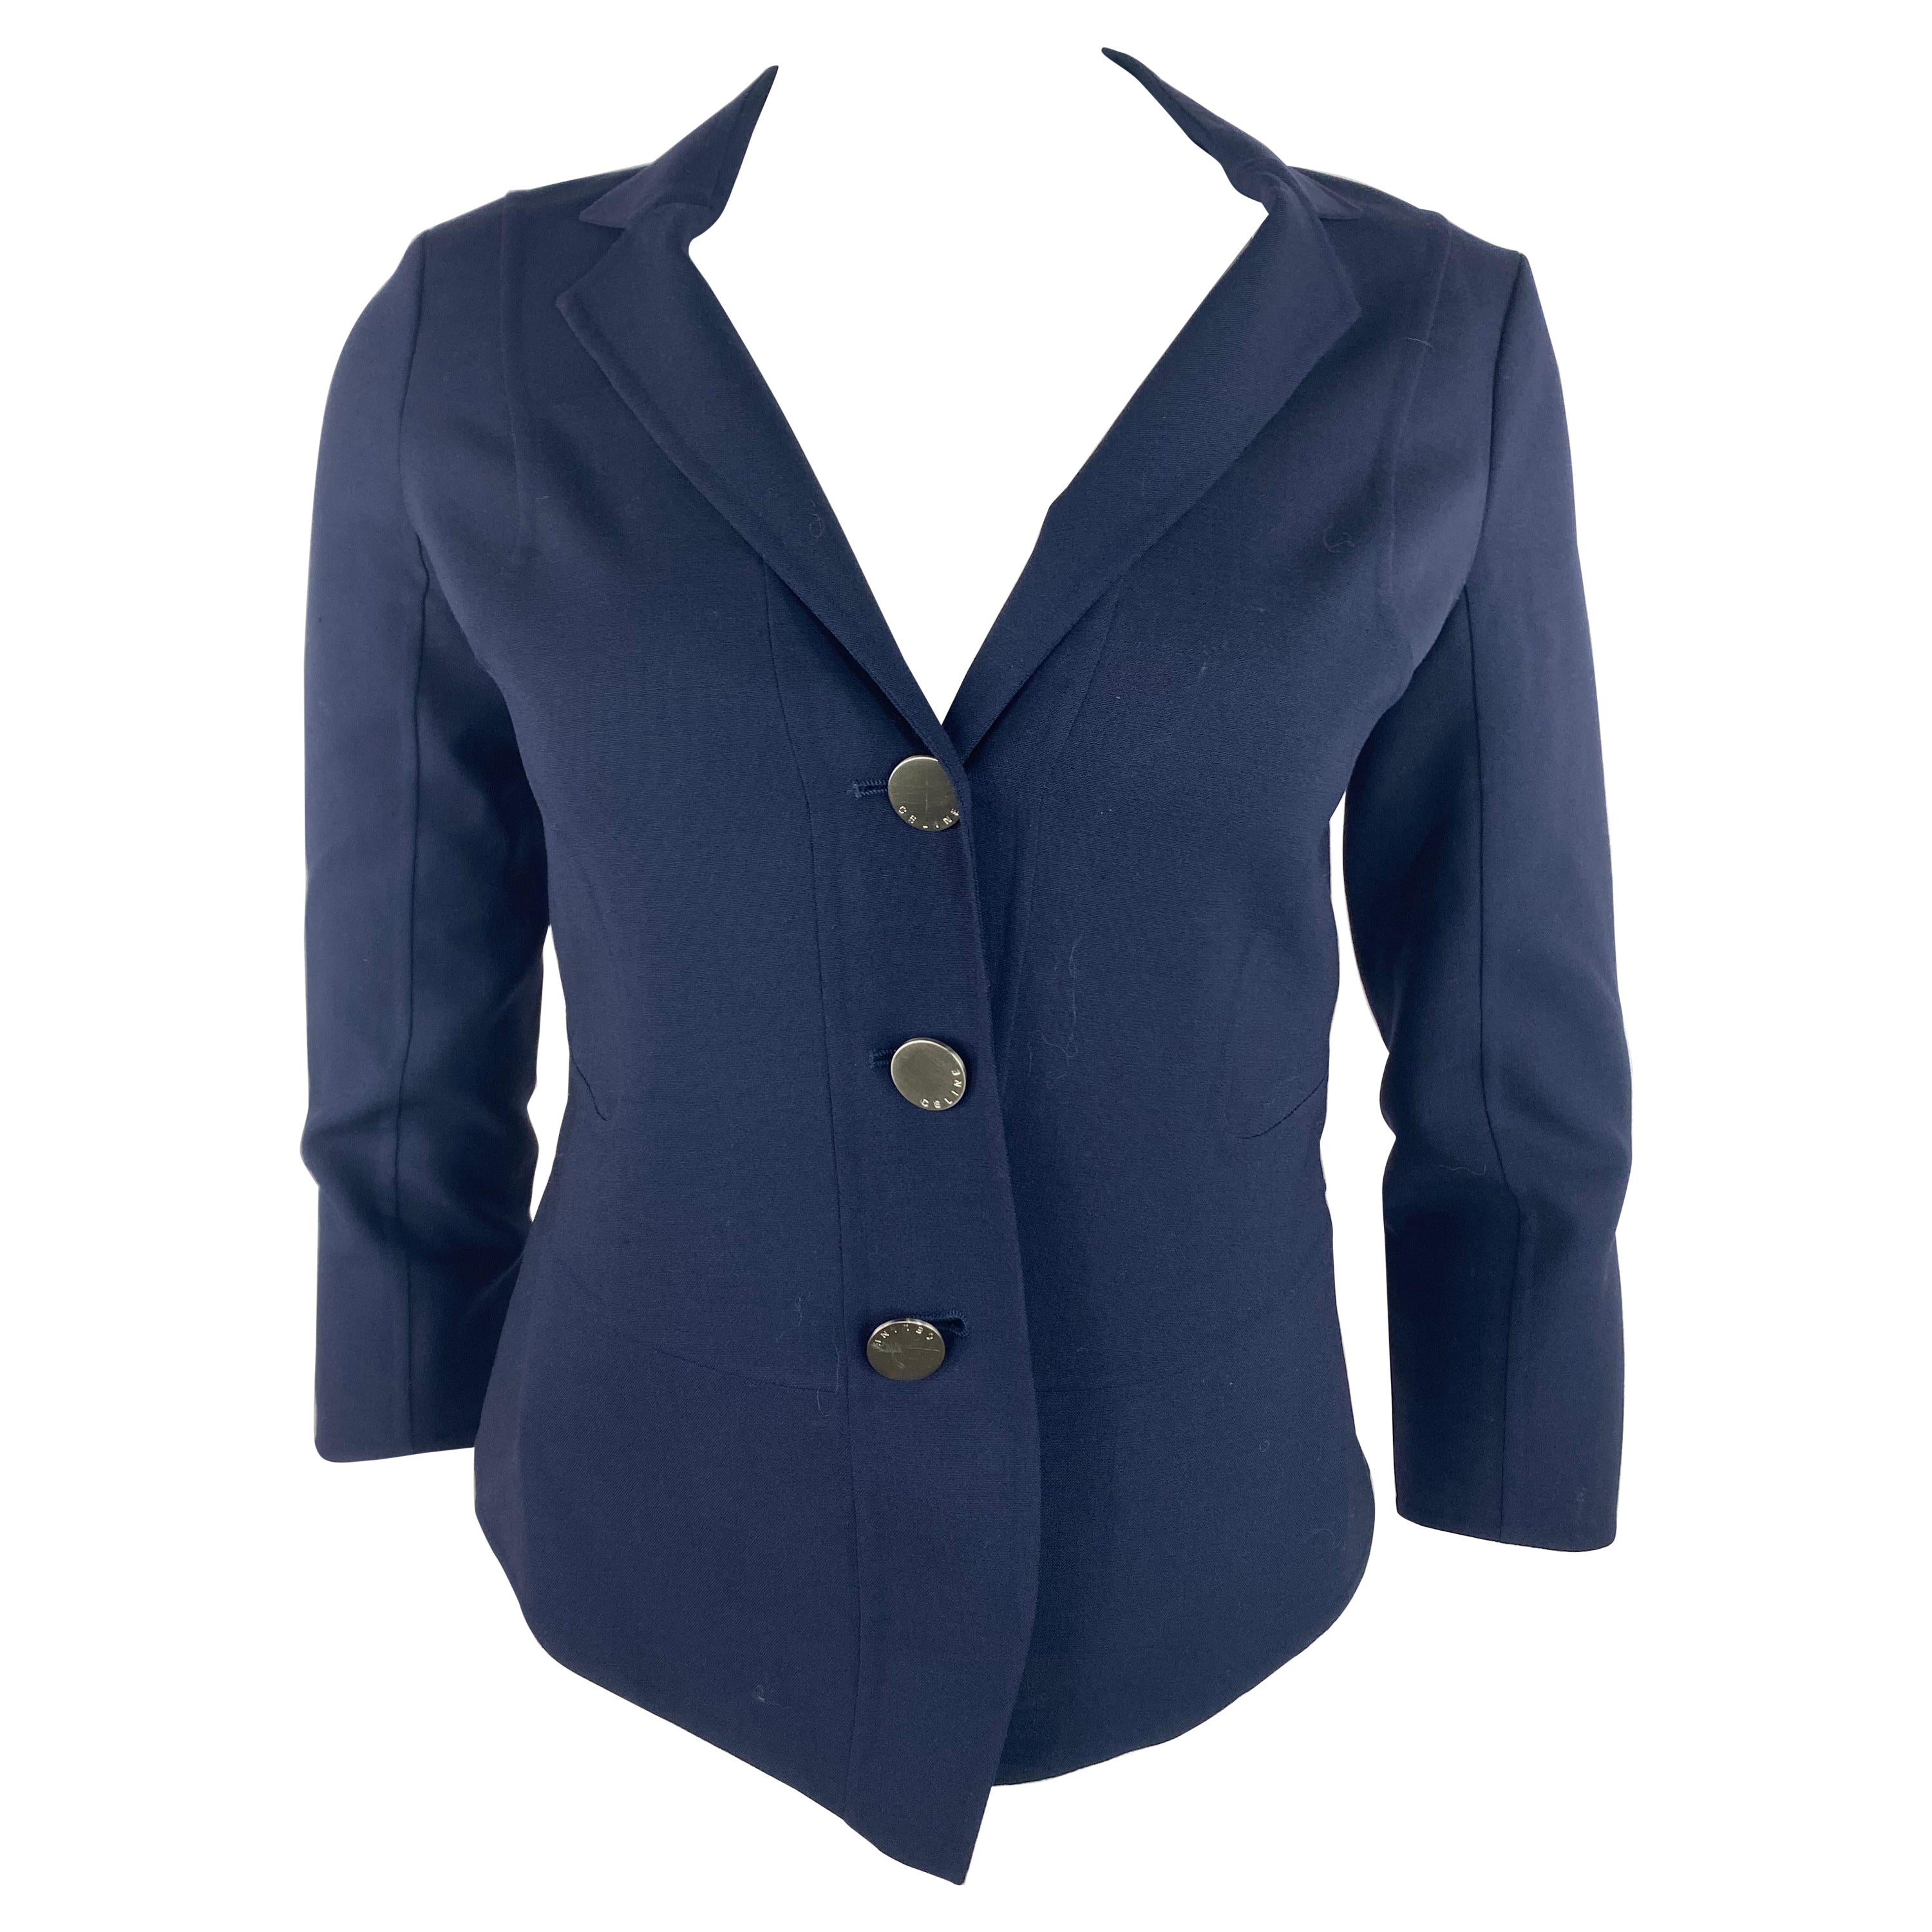 Celine Navy Blazer Jacket, Size 38